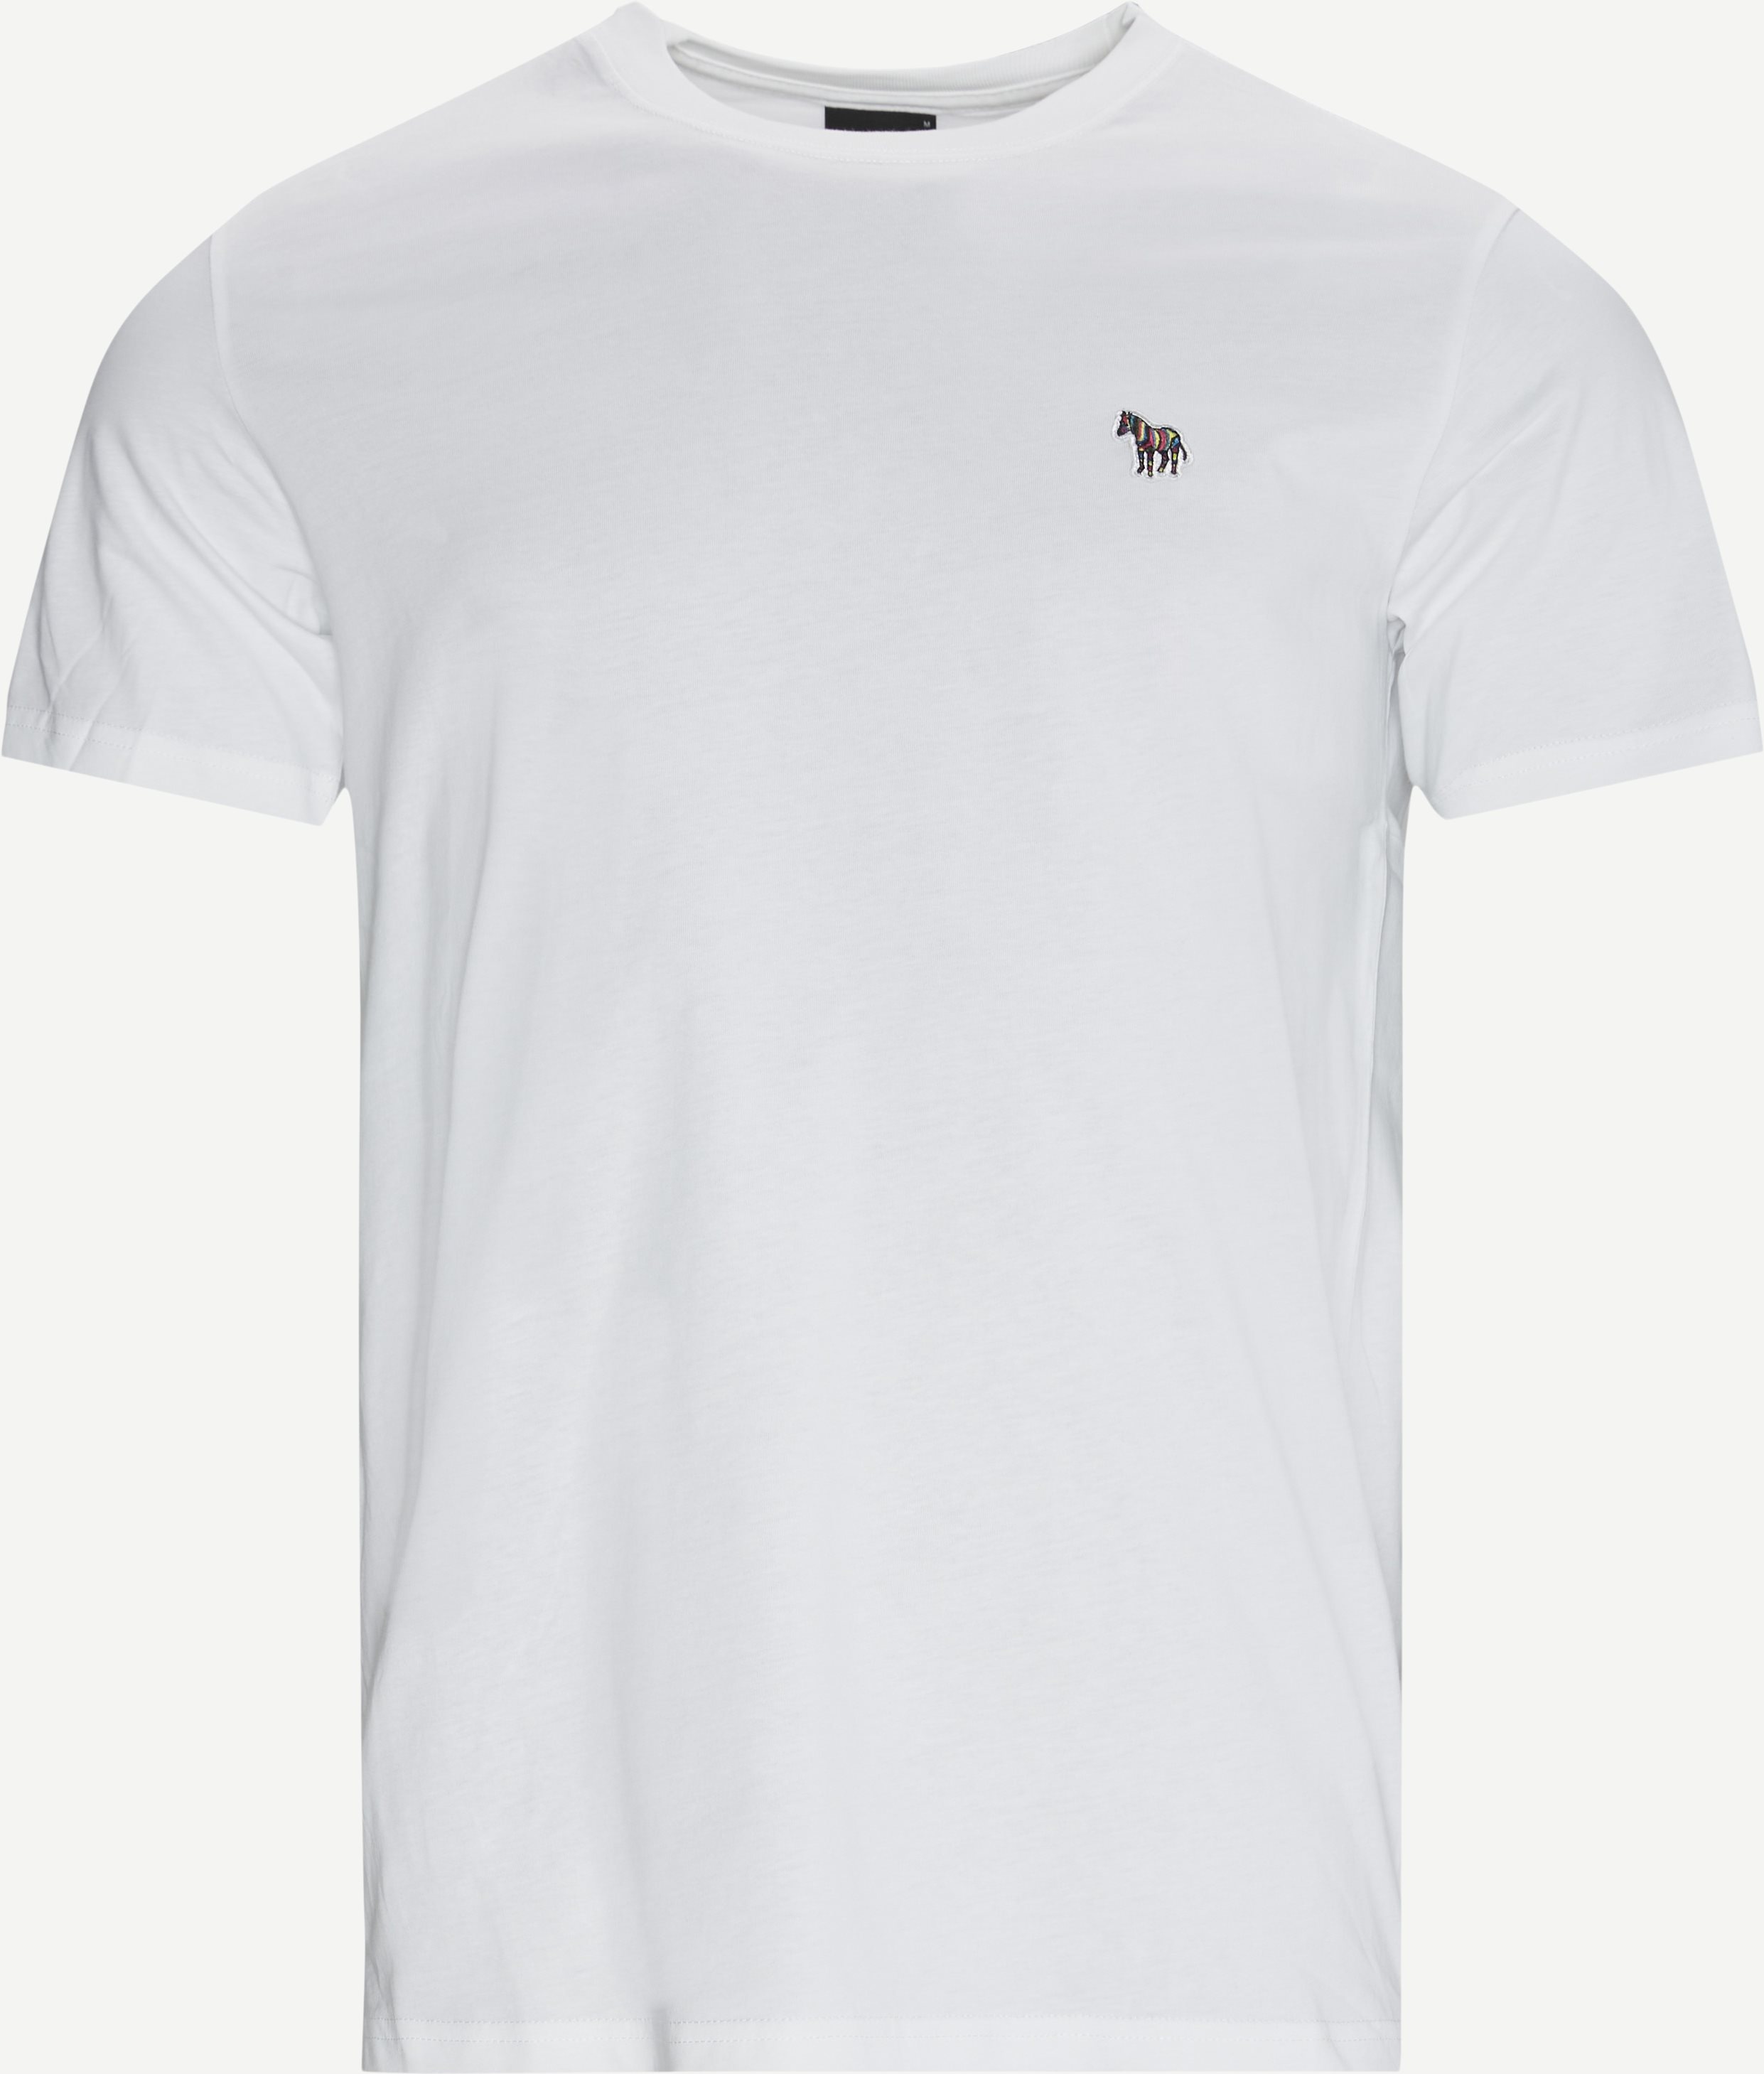 Azebra T-shirt - T-shirts - Regular fit - White